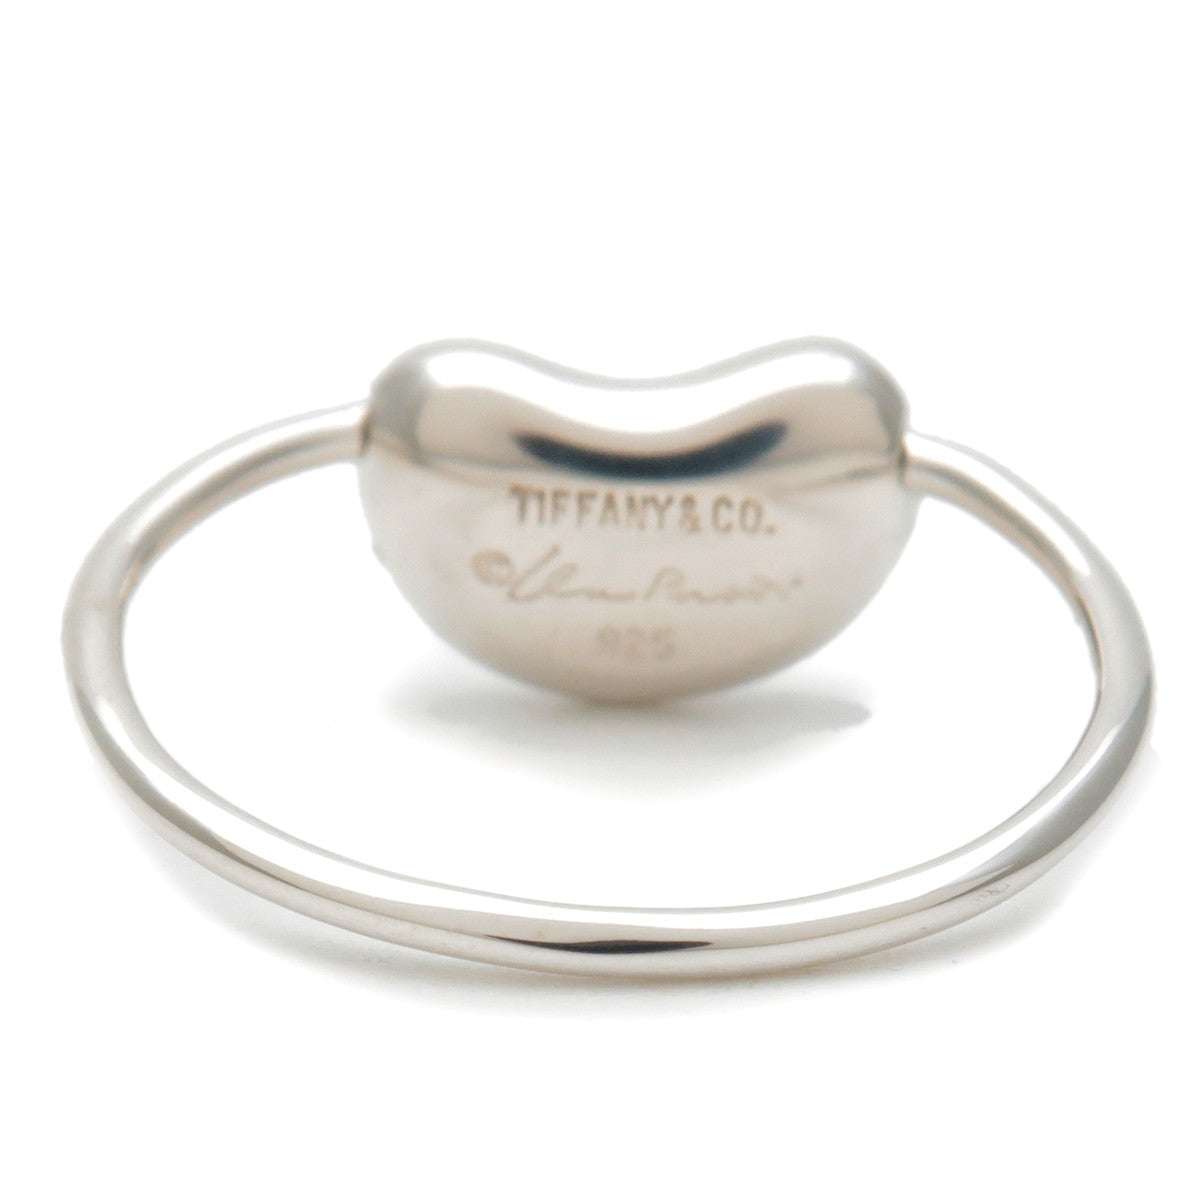 Tiffany&Co. Bean Ring Small SV925 Silver #9 US5 HK11 EU49.5